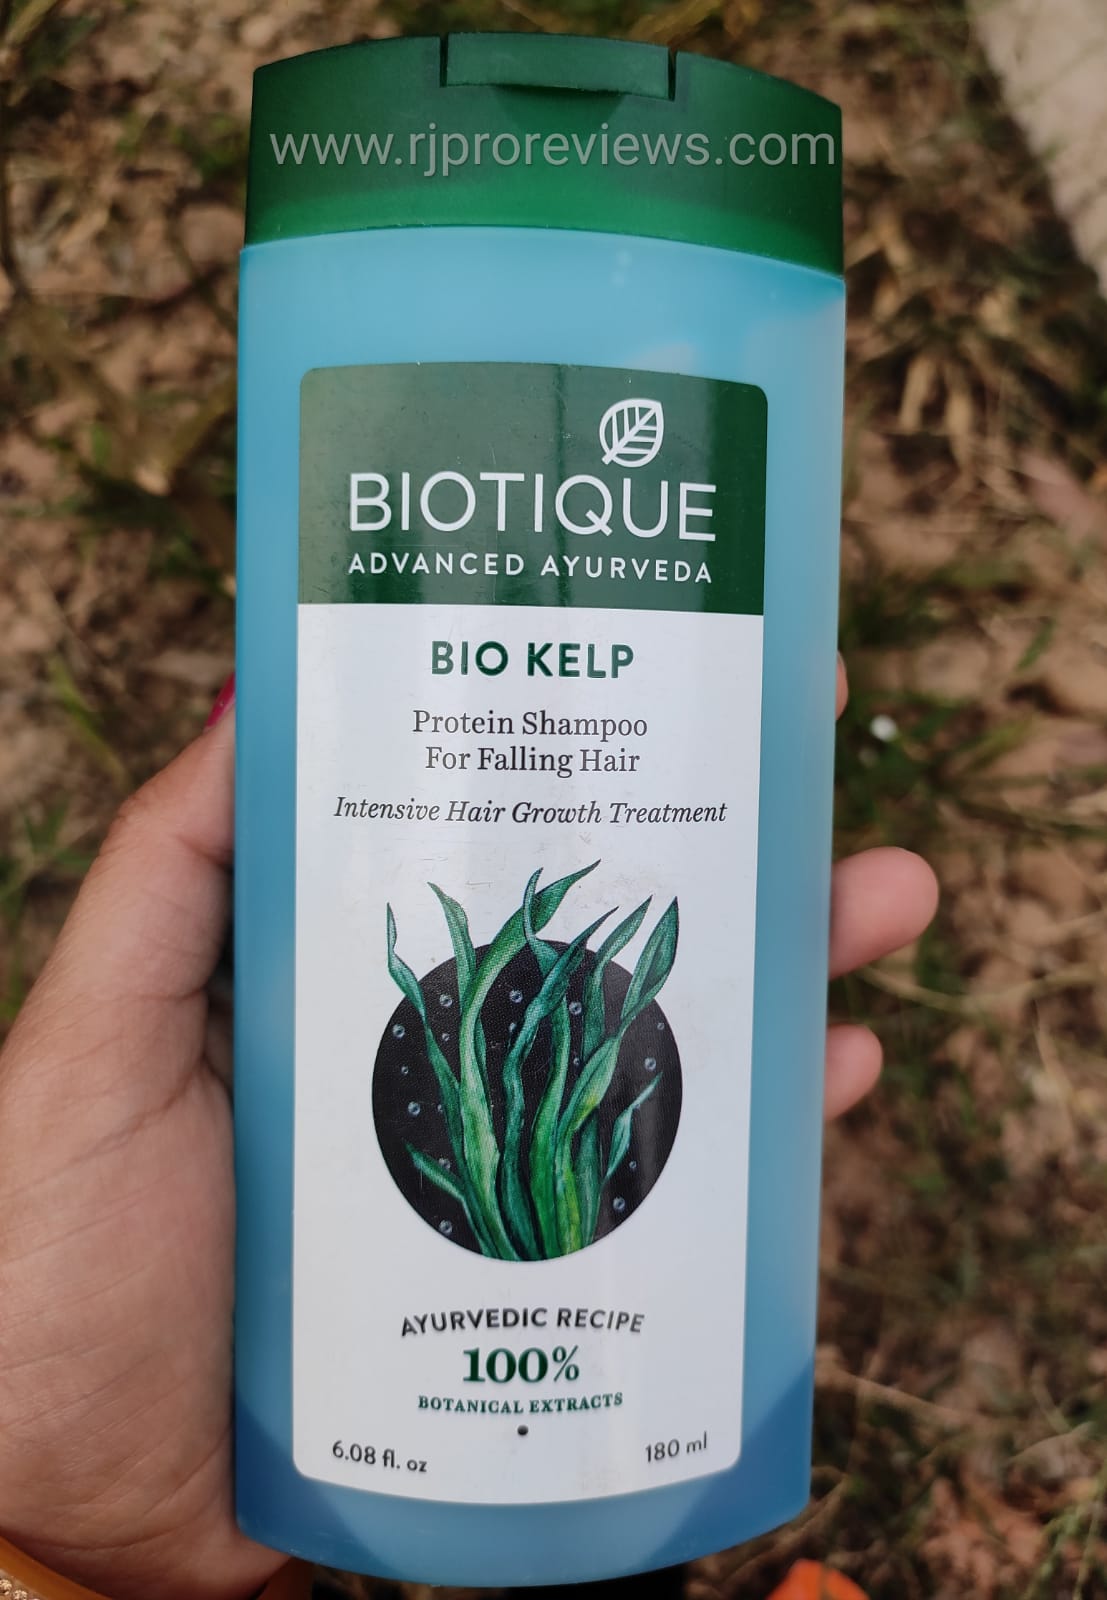 Biotique Bio Kelp Protein Shampoo Review - RJ PRO REVIEWS